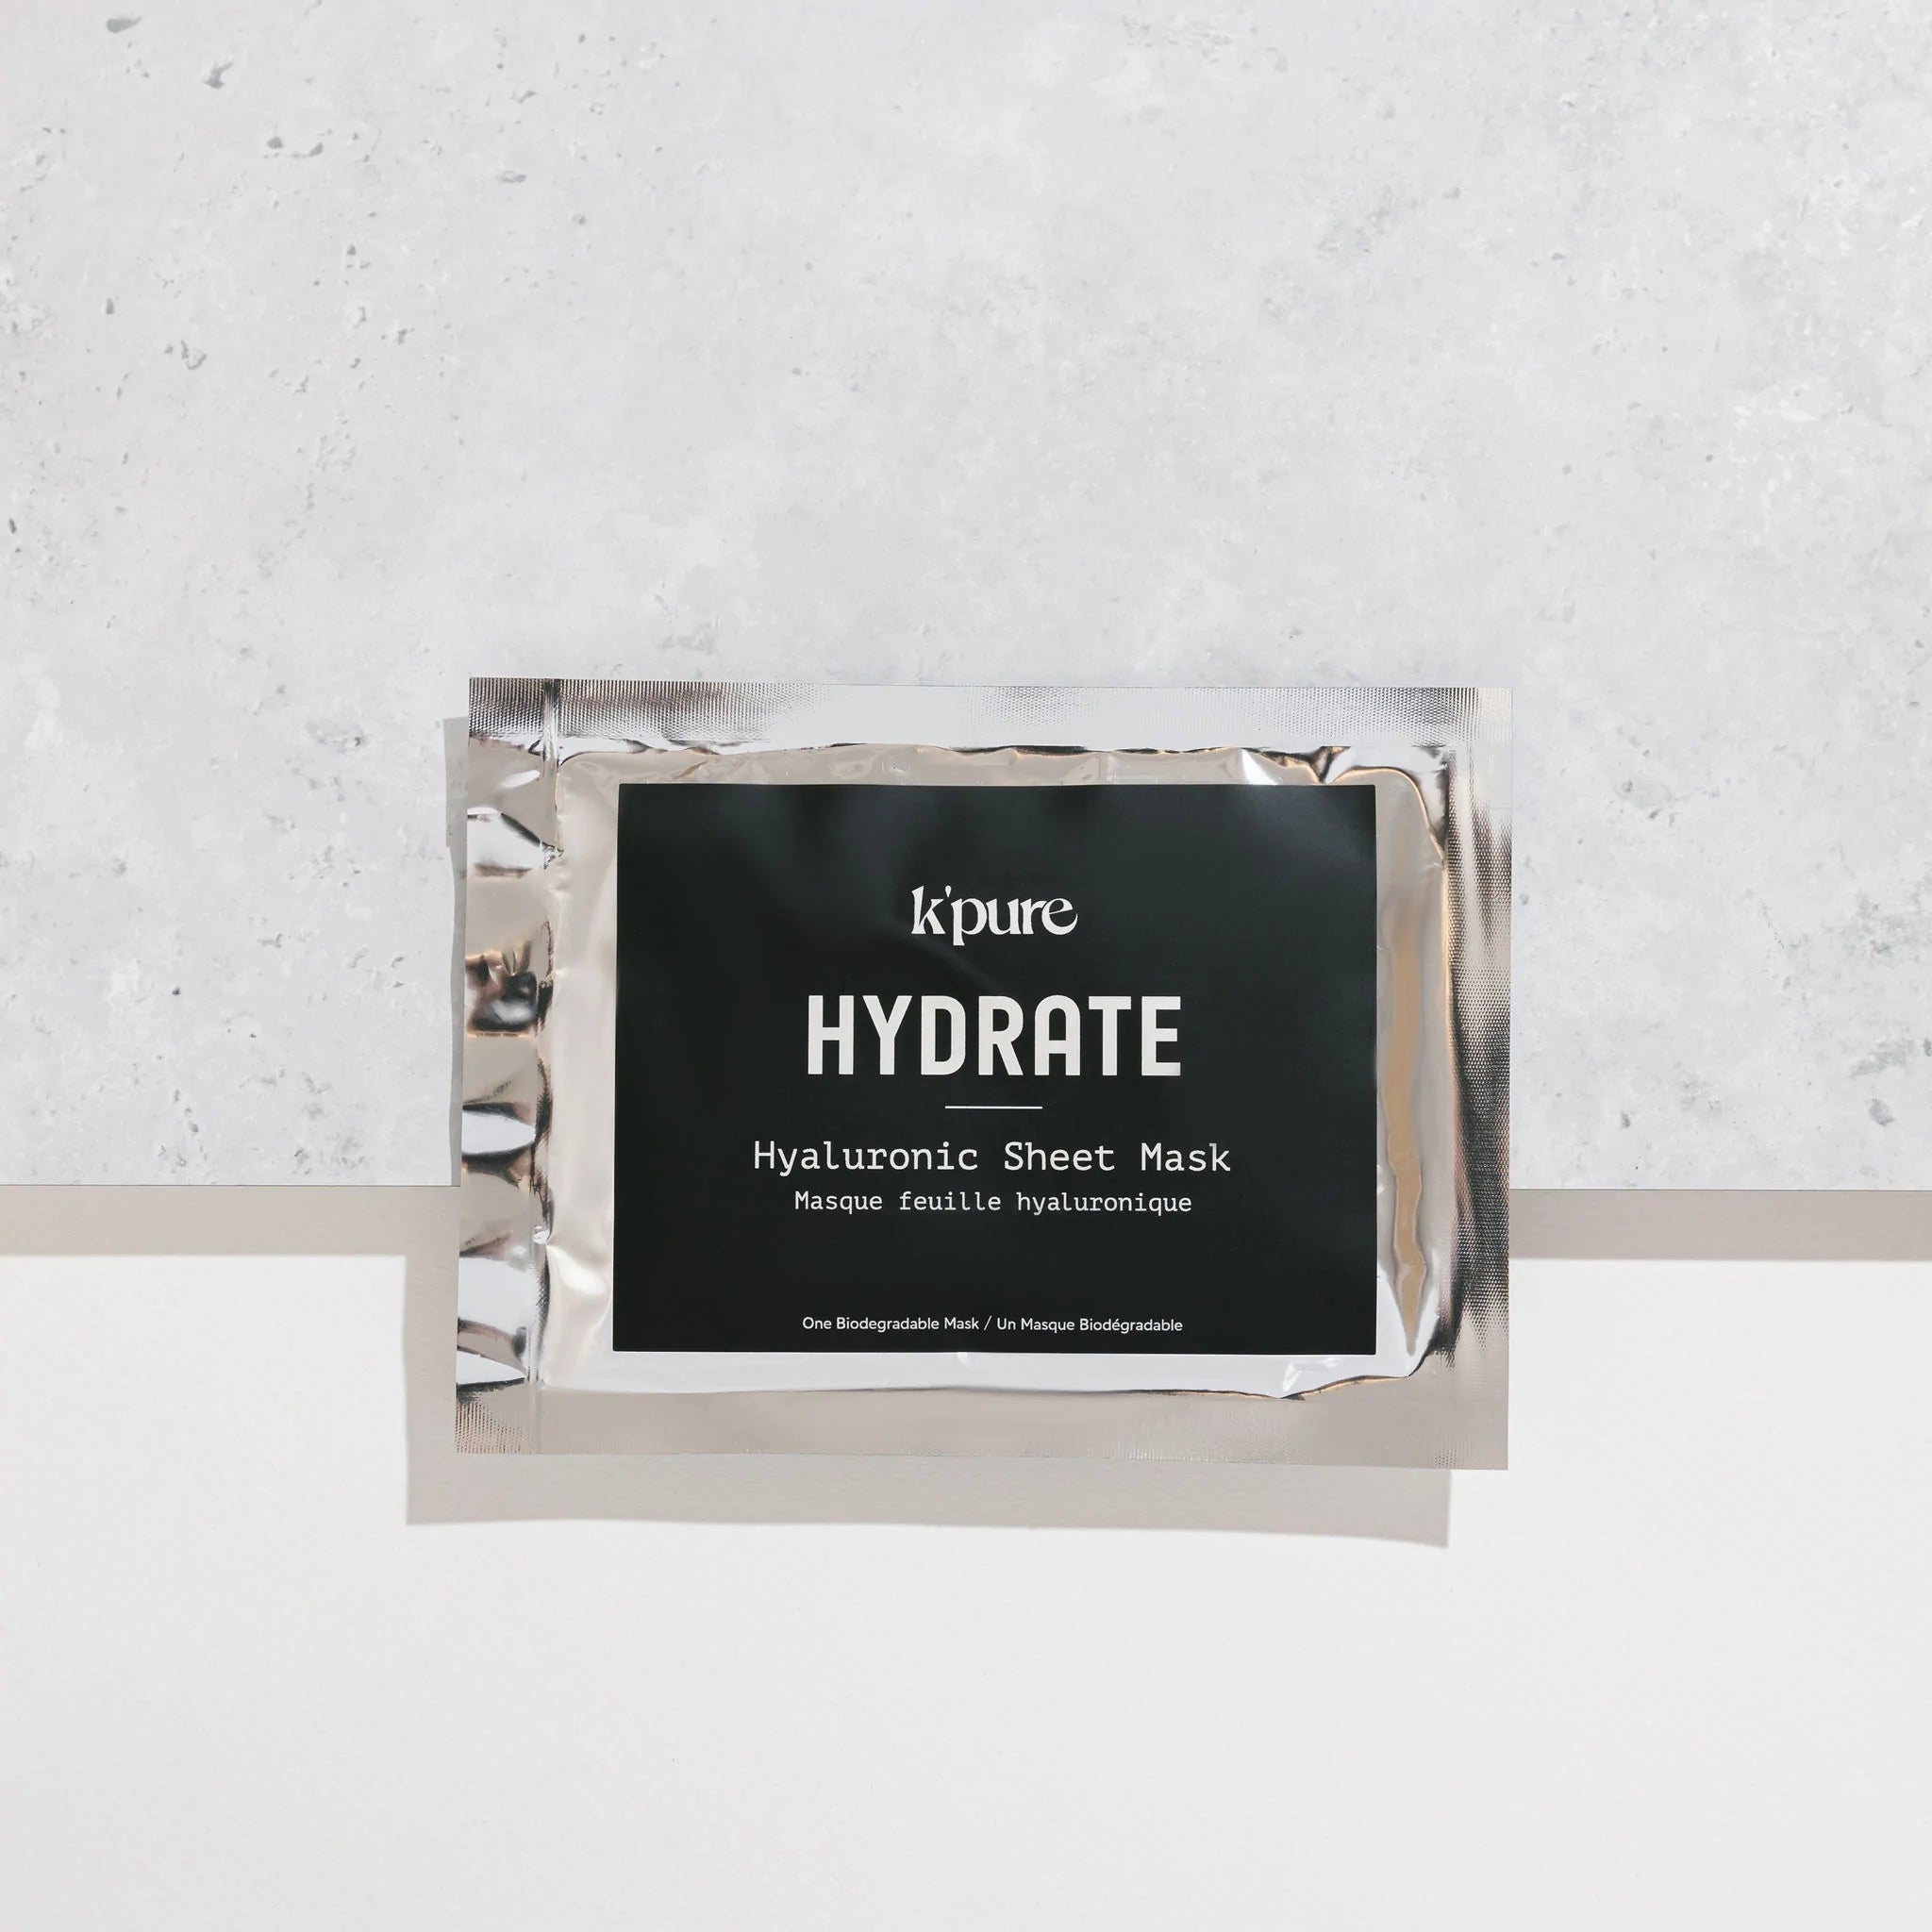 KPURE Hydrate - Hyaluronic Sheet Mask